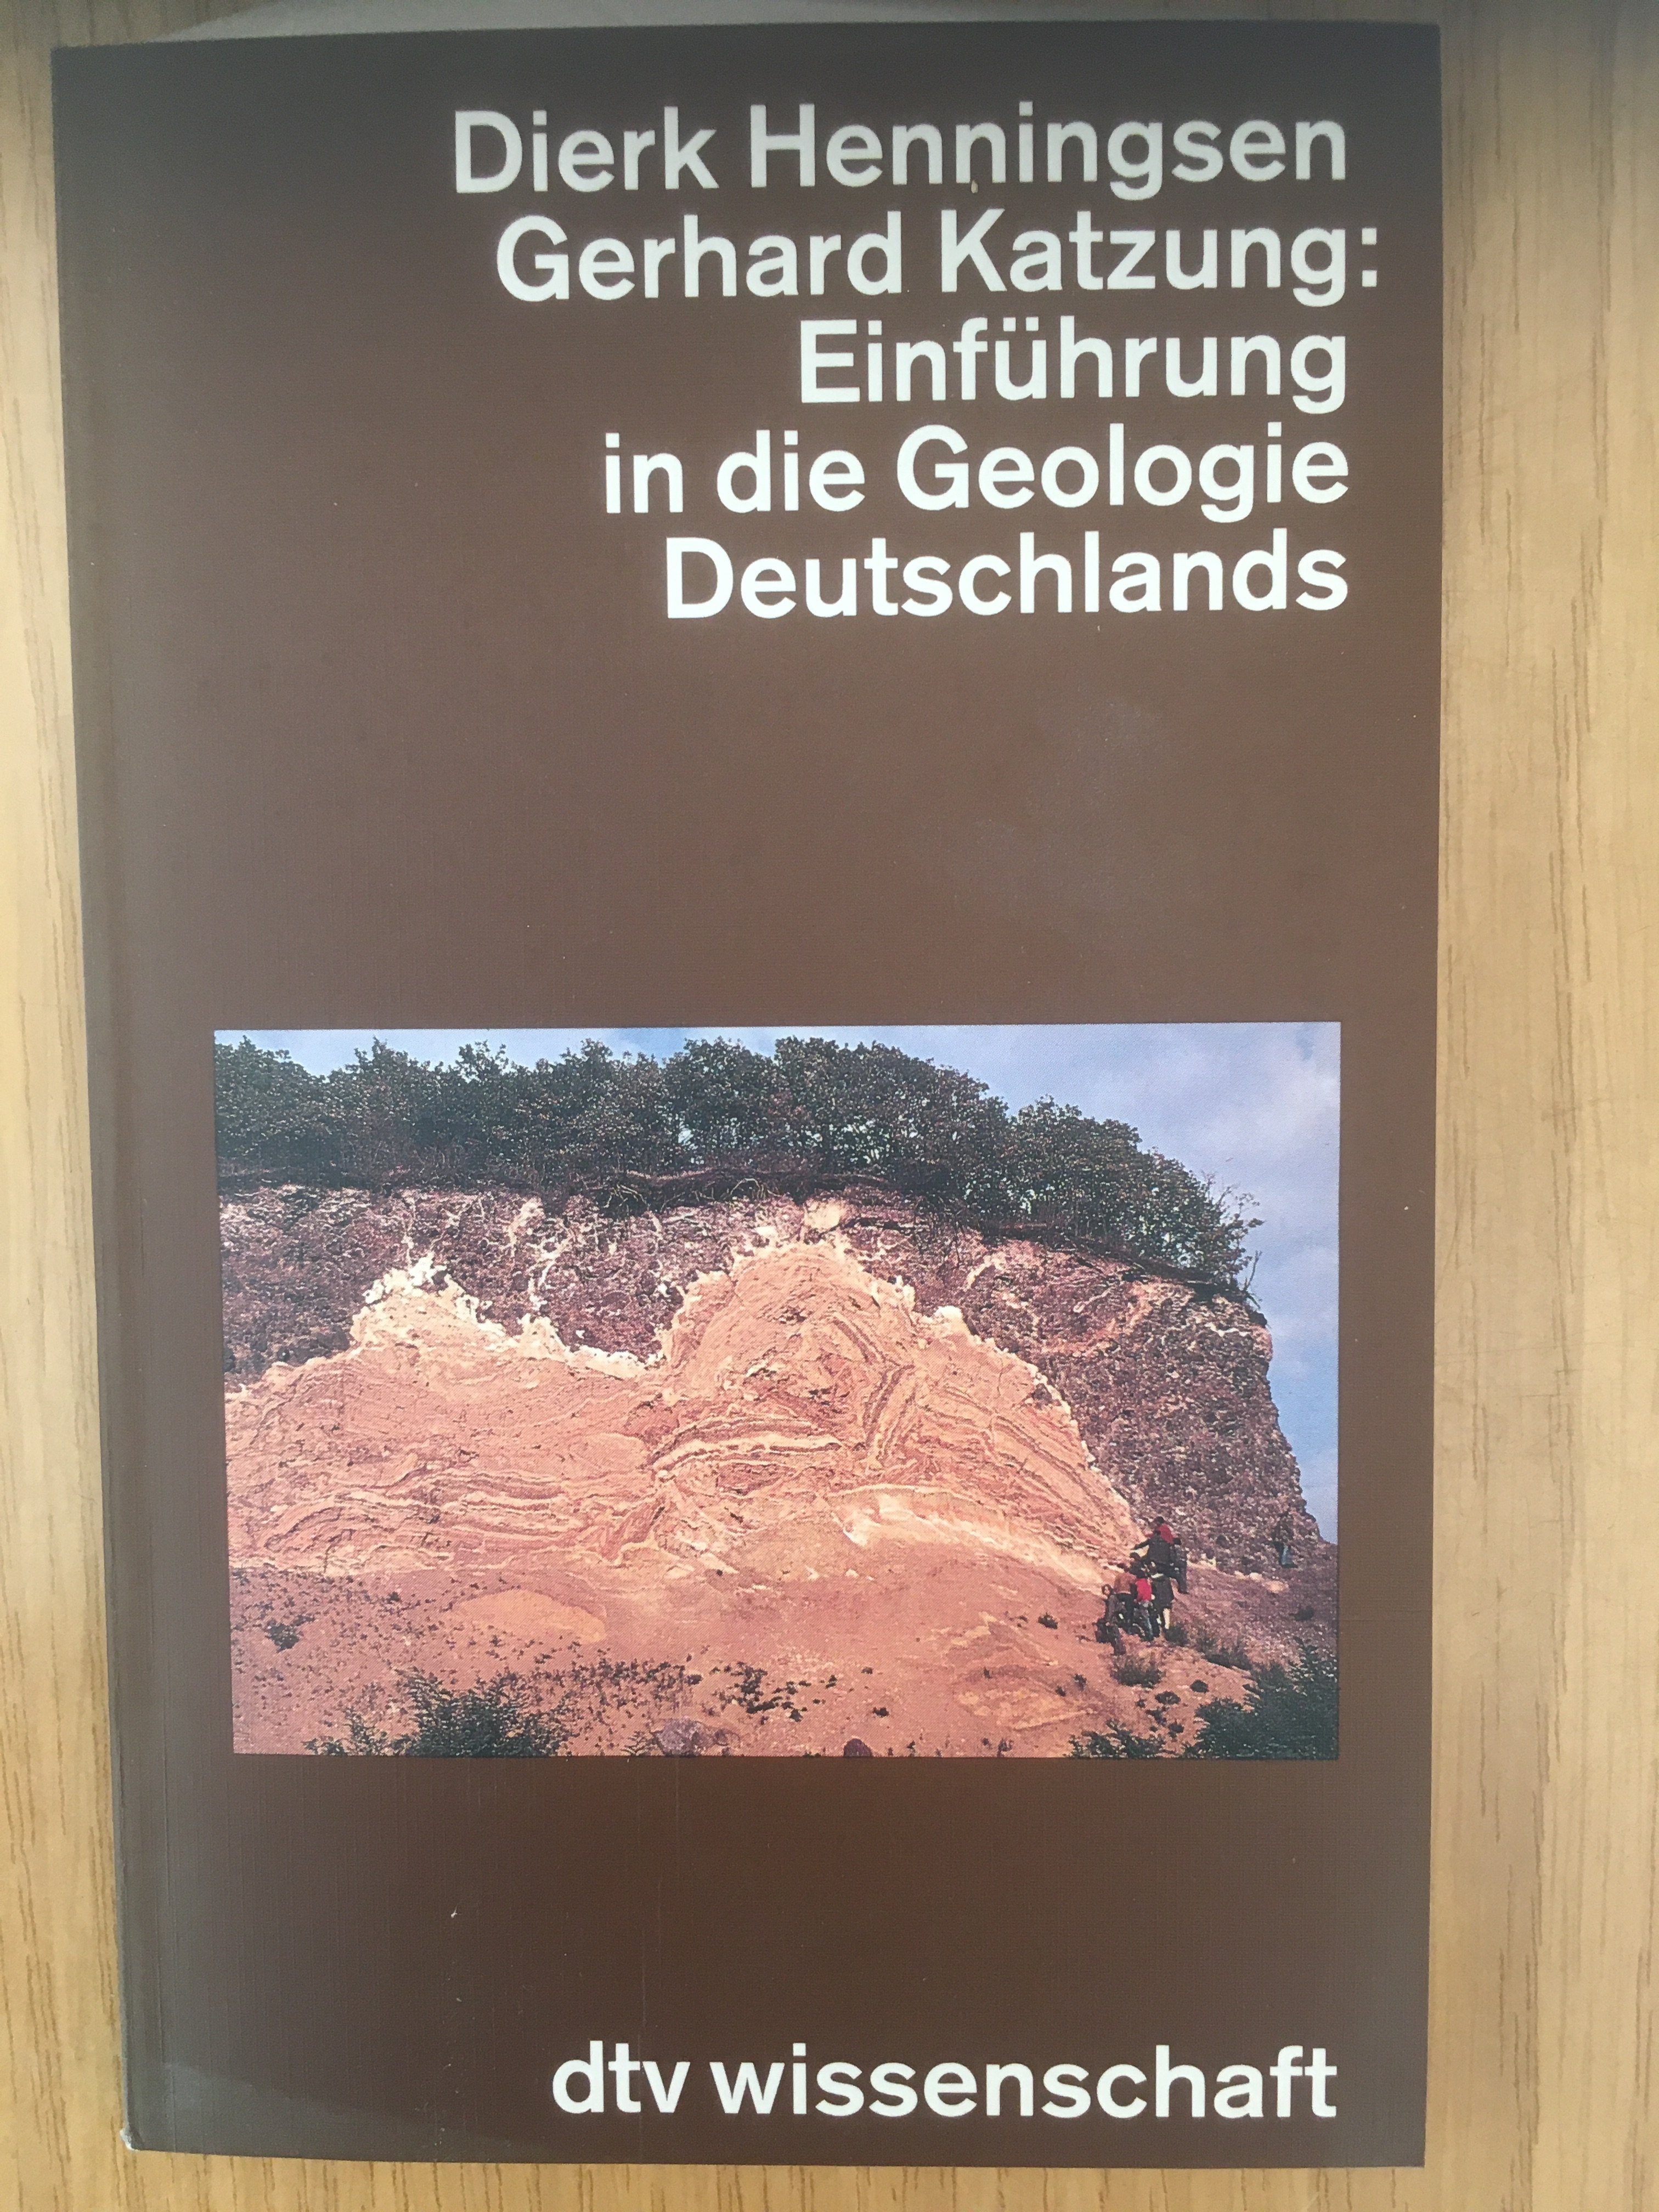 hhgf (Besucherbergwerk und Bergbaumuseum "Grube Silberhardt" CC BY-NC-SA)